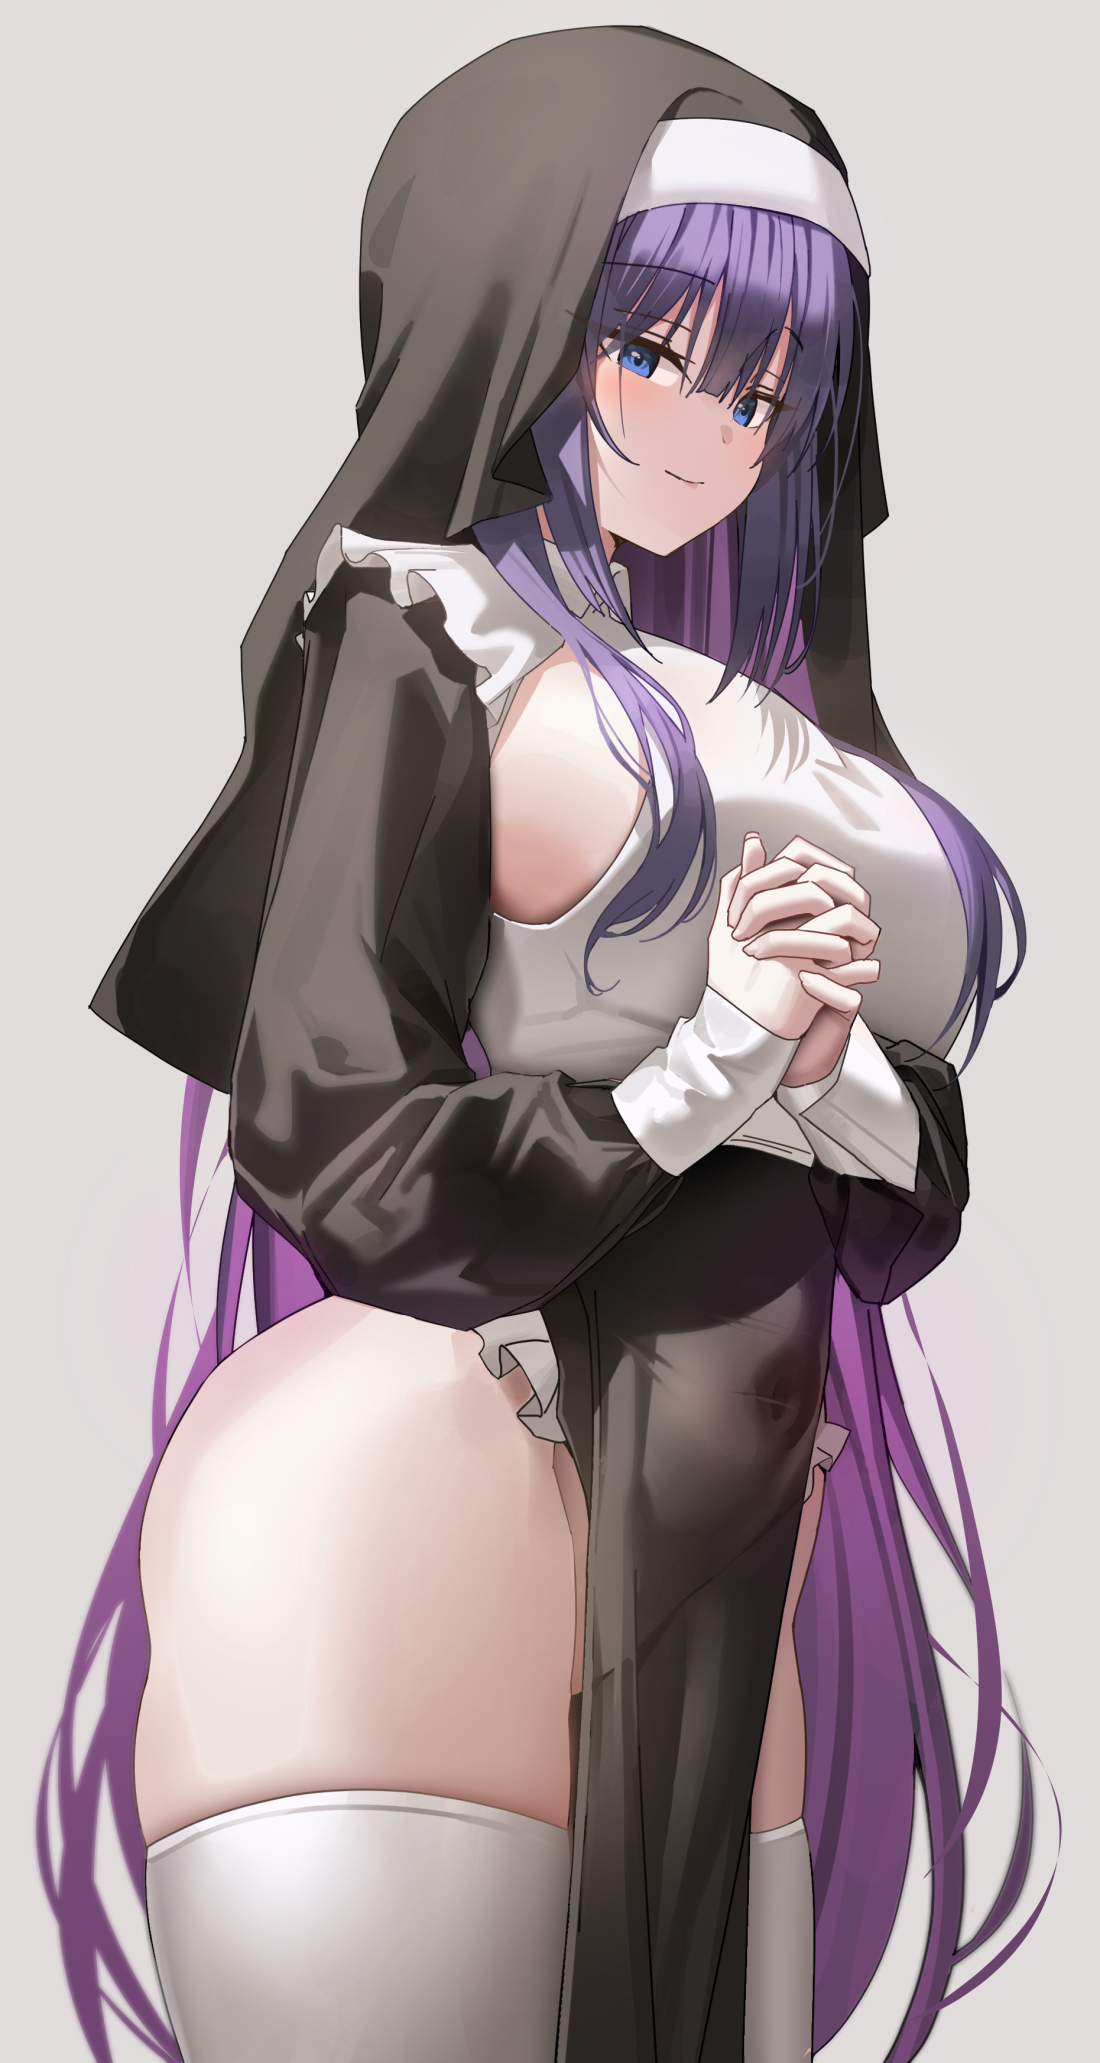 Anime 1100x2063 K pring anime girls purple hair nun outfit thighs sideboob big boobs white stockings